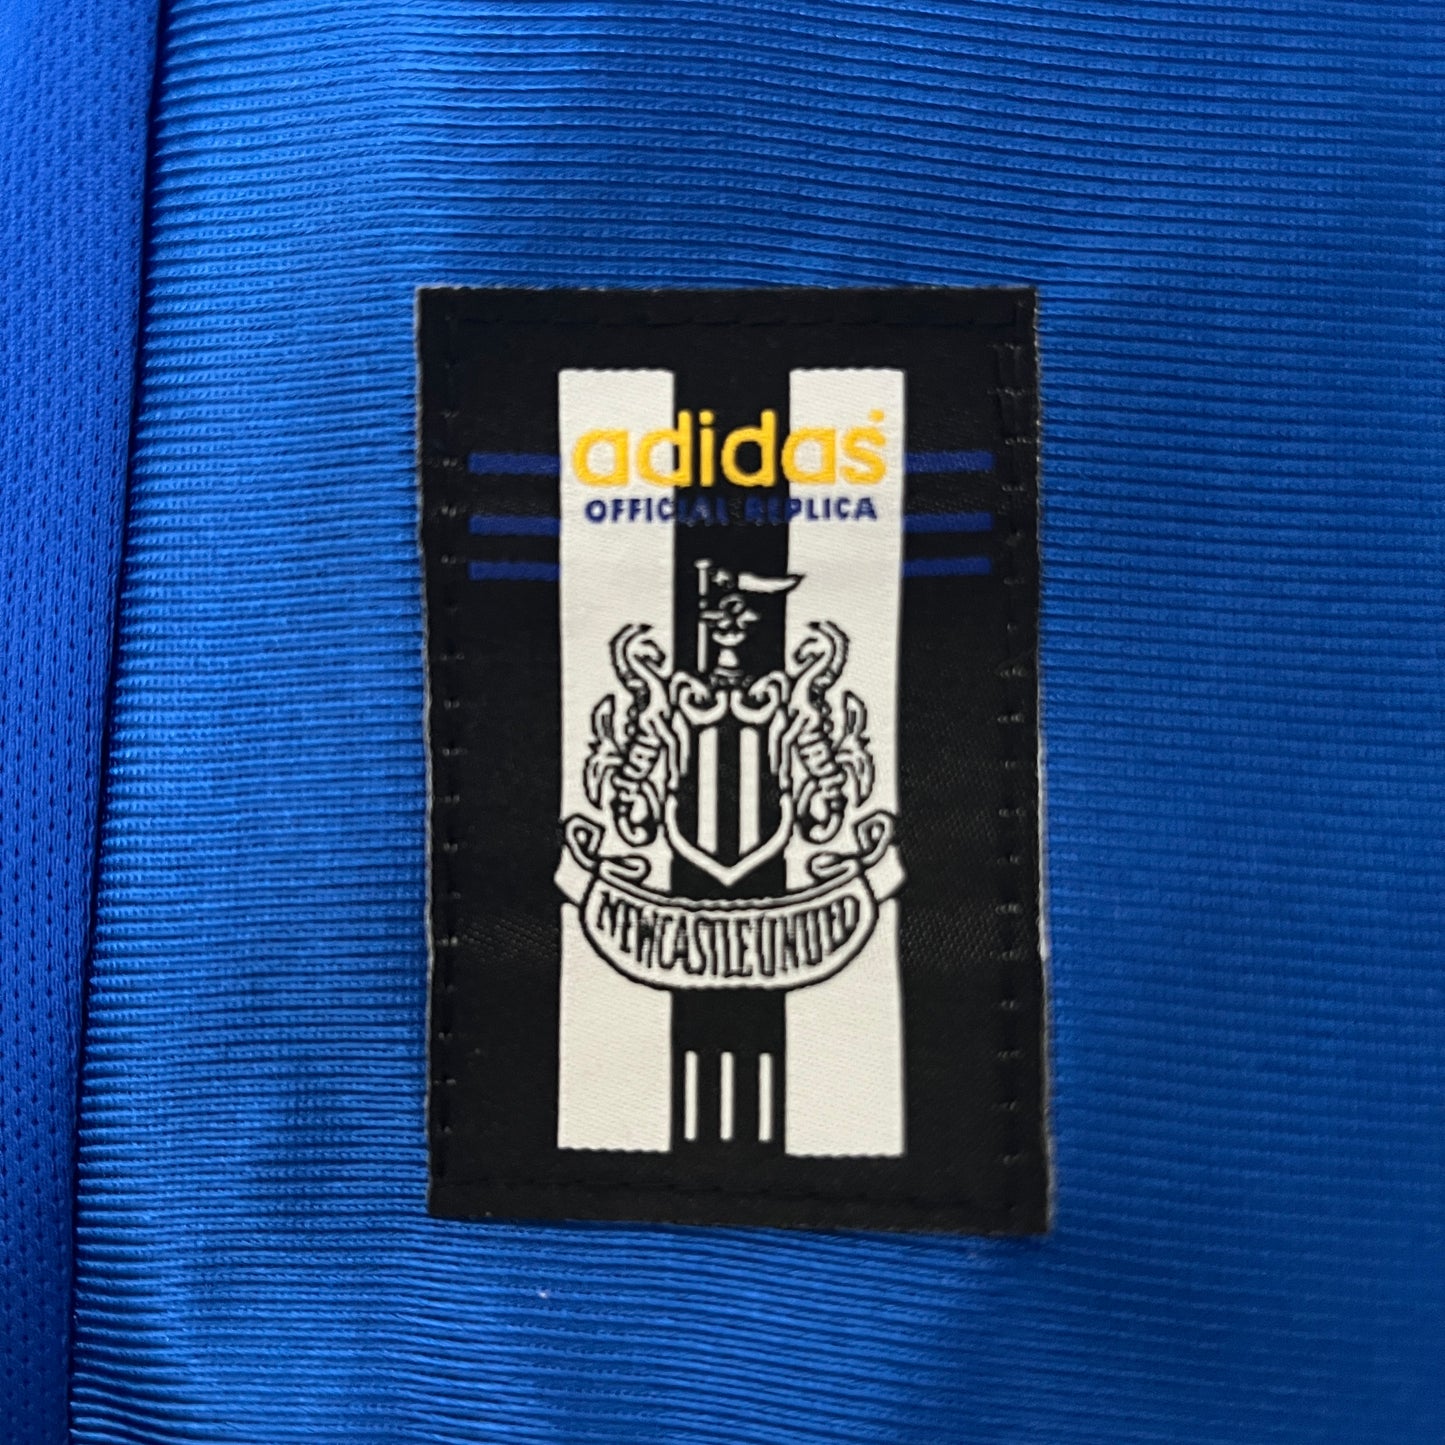 Retro Newcastle United 98/99 Away Kit